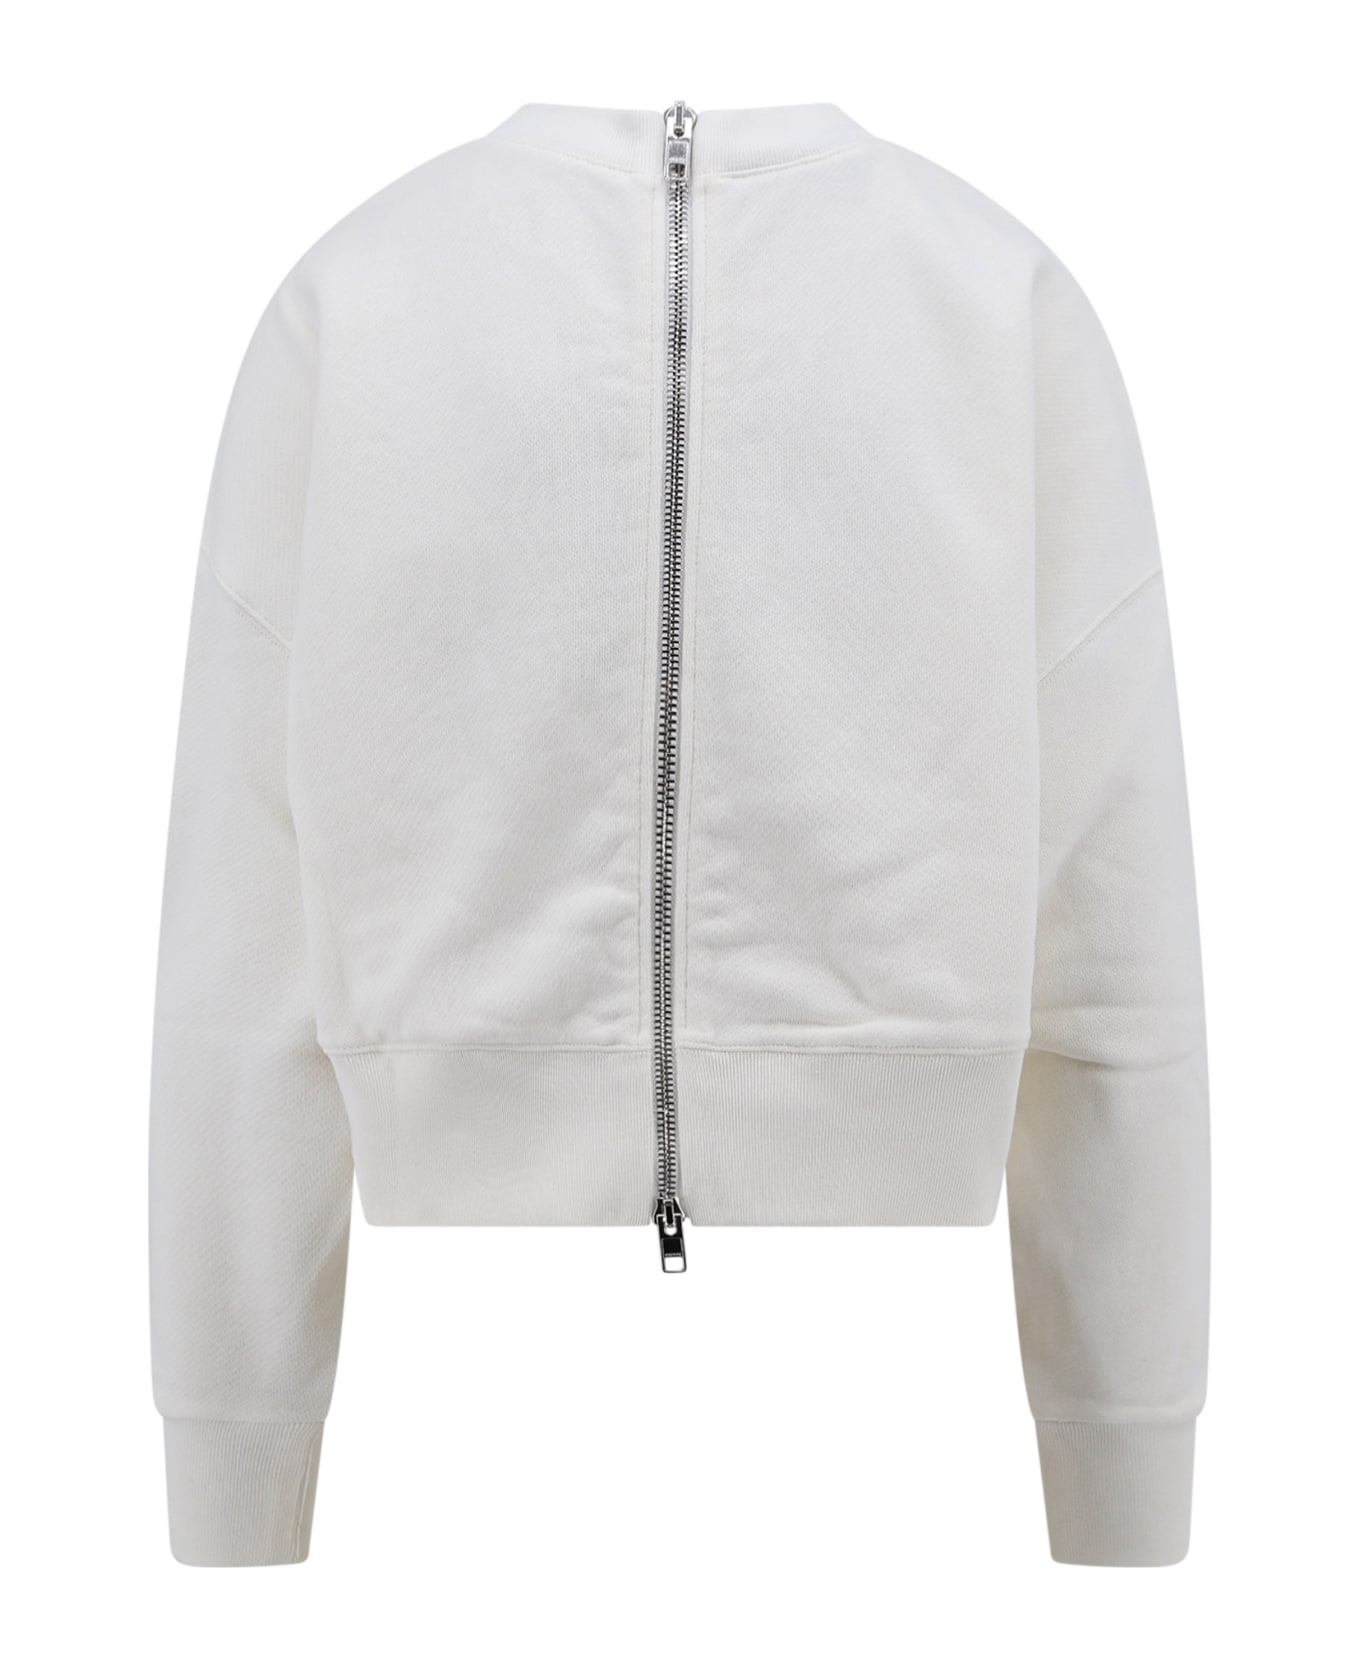 Gucci Sweatshirt - White フリース